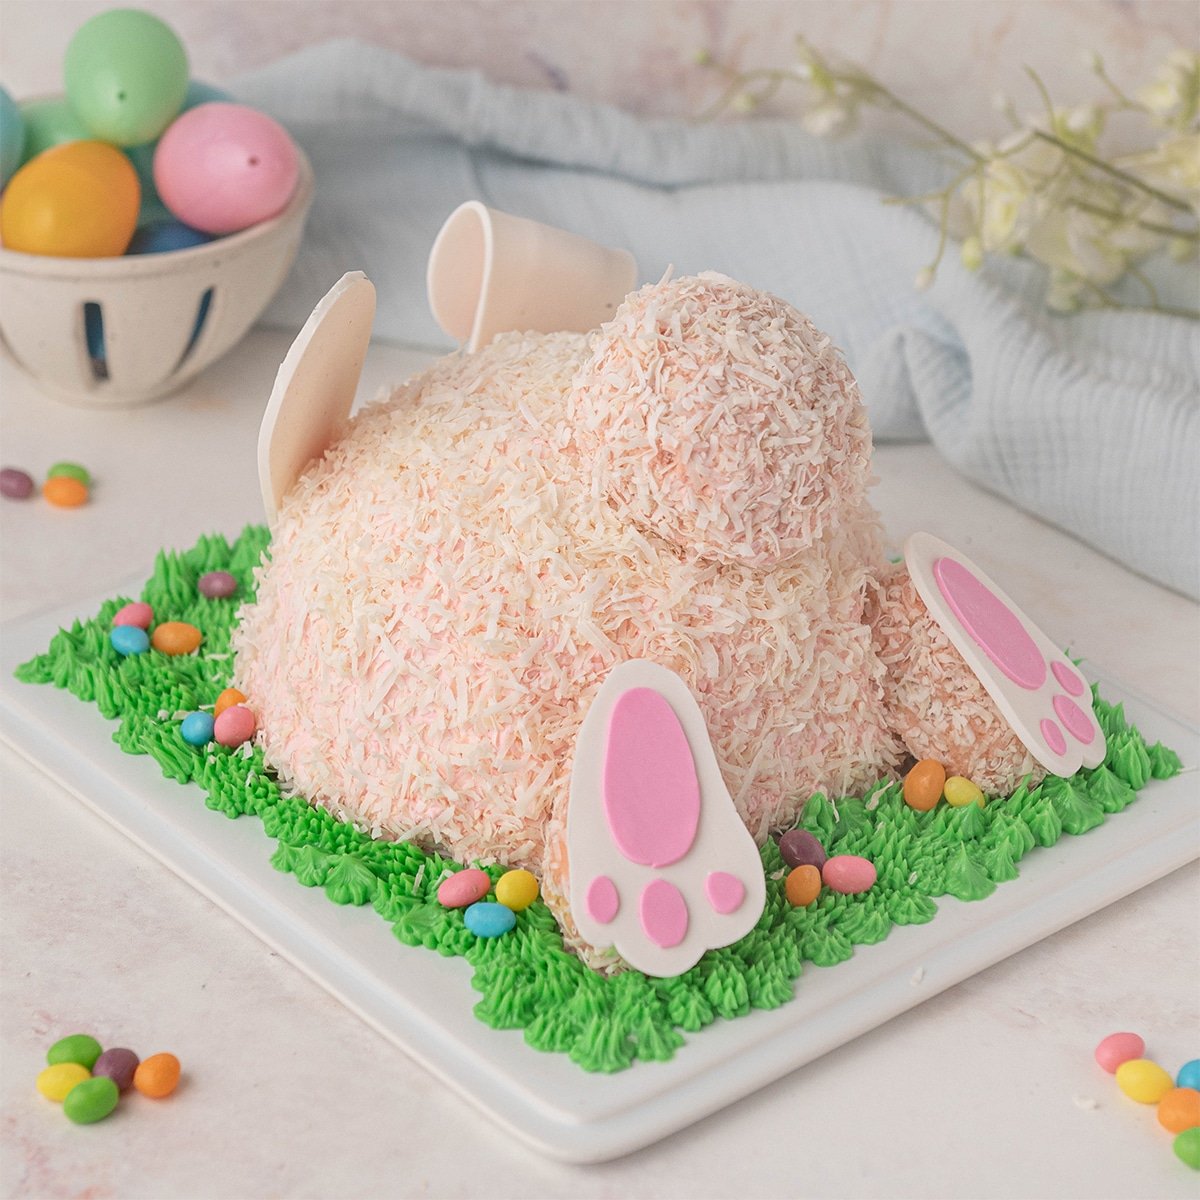 bunny butt cake on a cake board